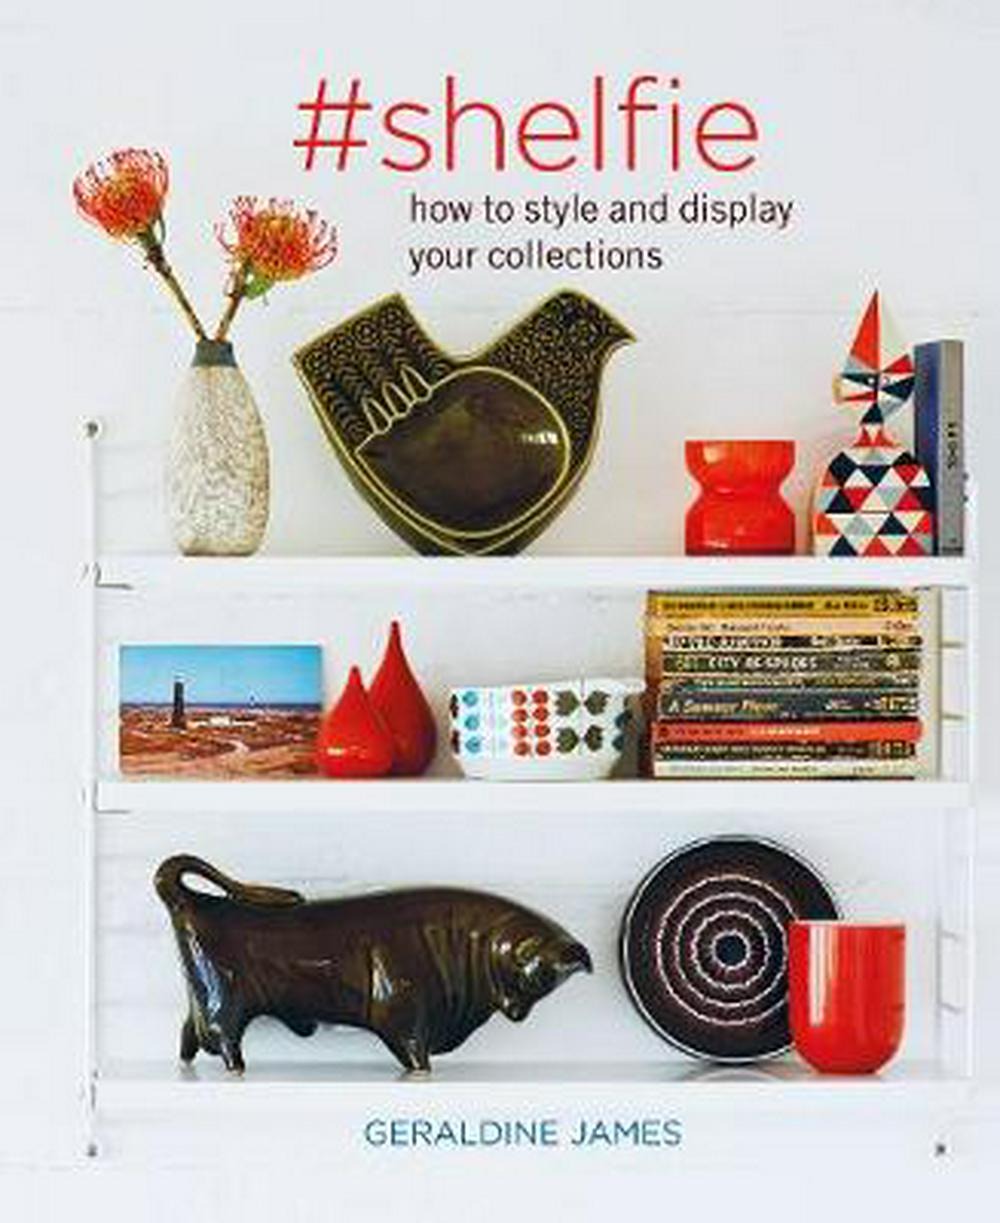 #shelfie by Geraldine James